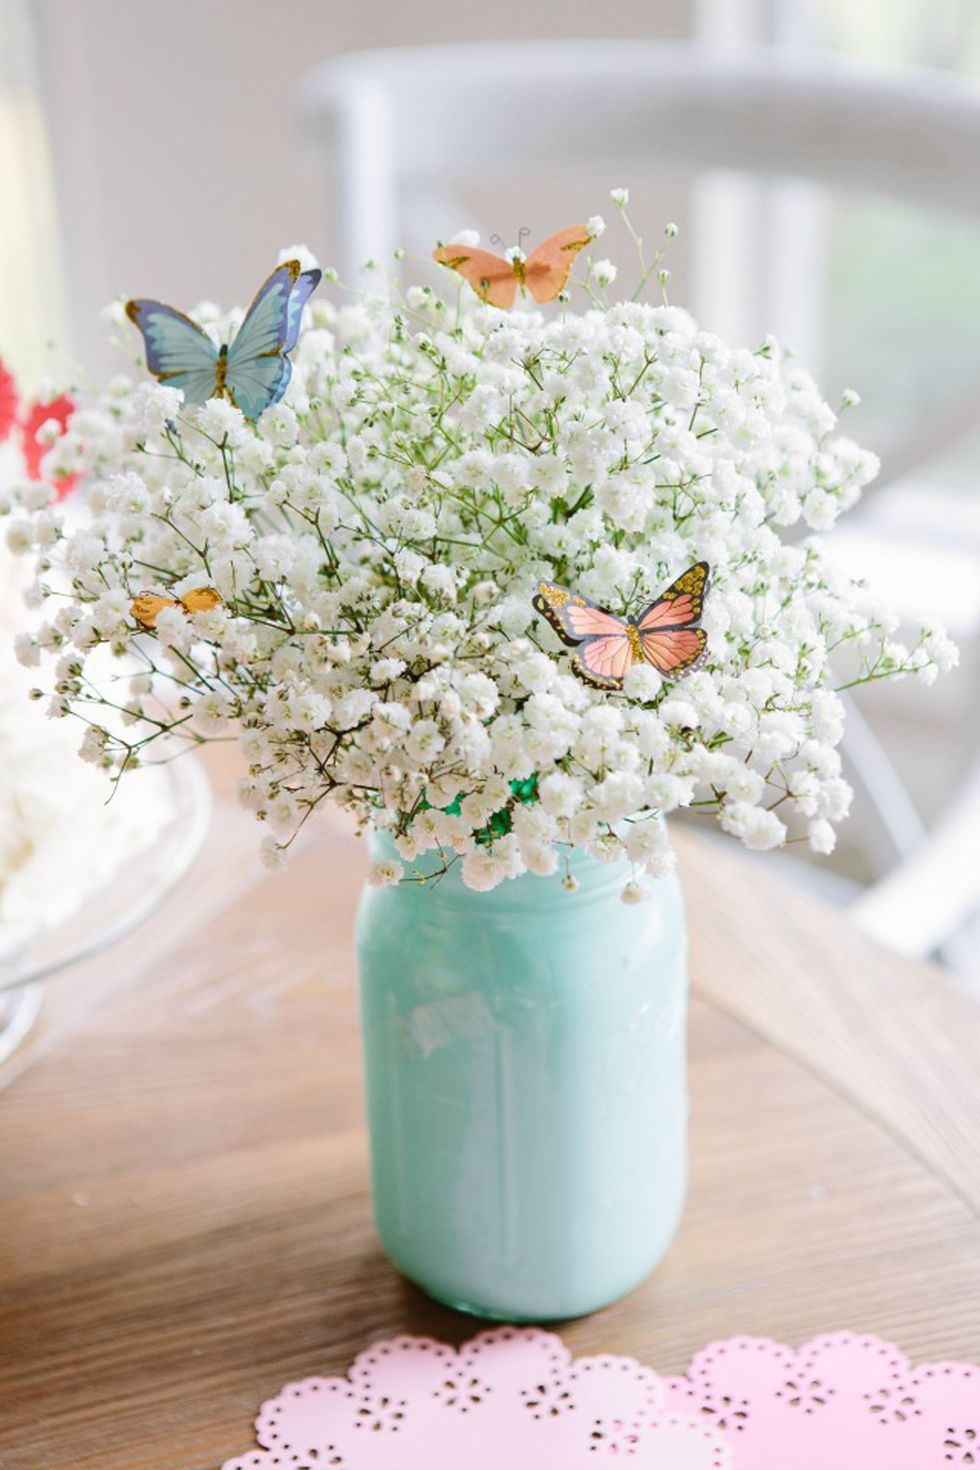 52 Easy Flower Arrangement Ideas - Creative DIY Floral Displays